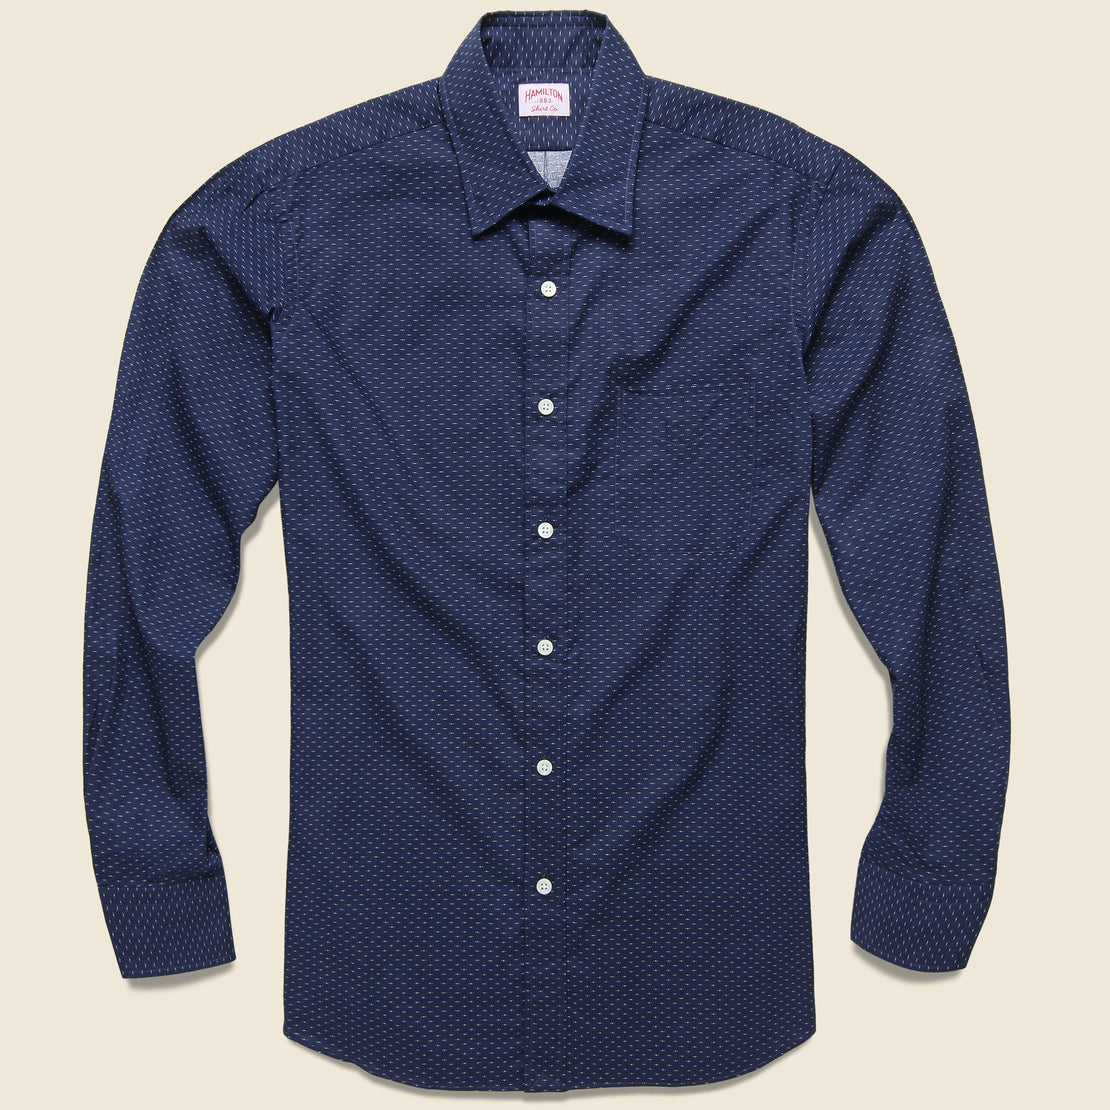 Hamilton Shirt Co. Spread Dot Shirt - Navy